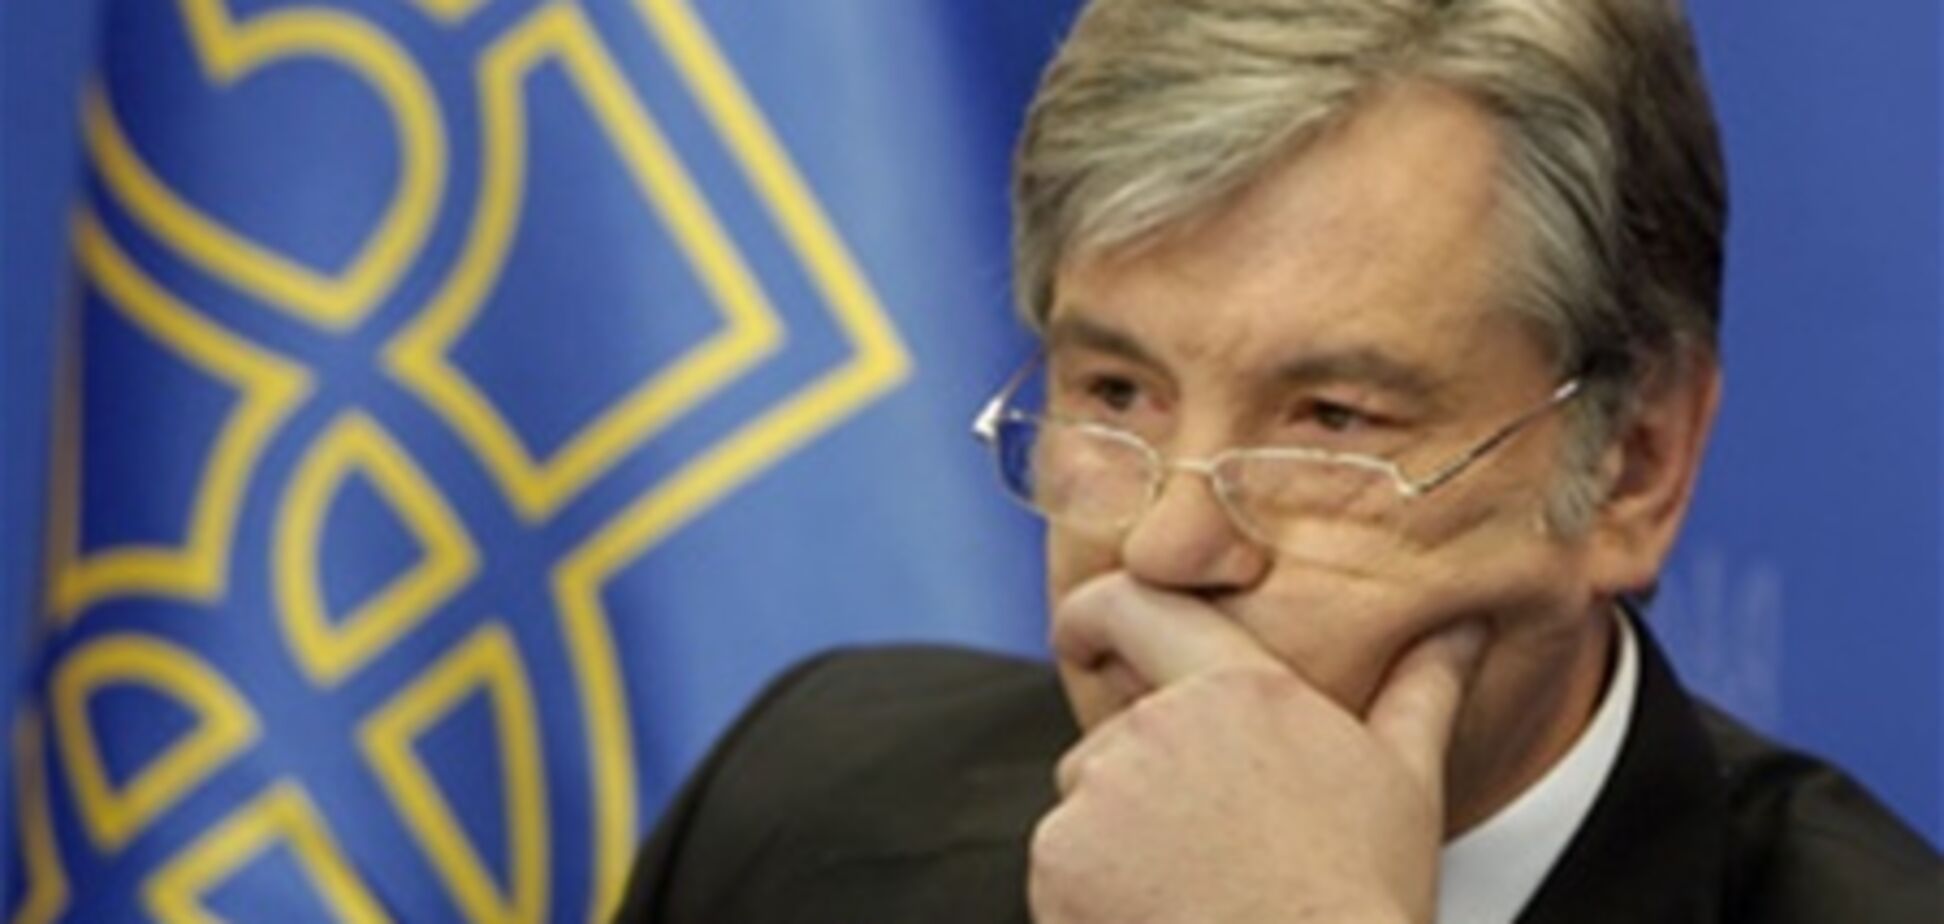 Рейтинг Ющенко упал до уровня Витренко